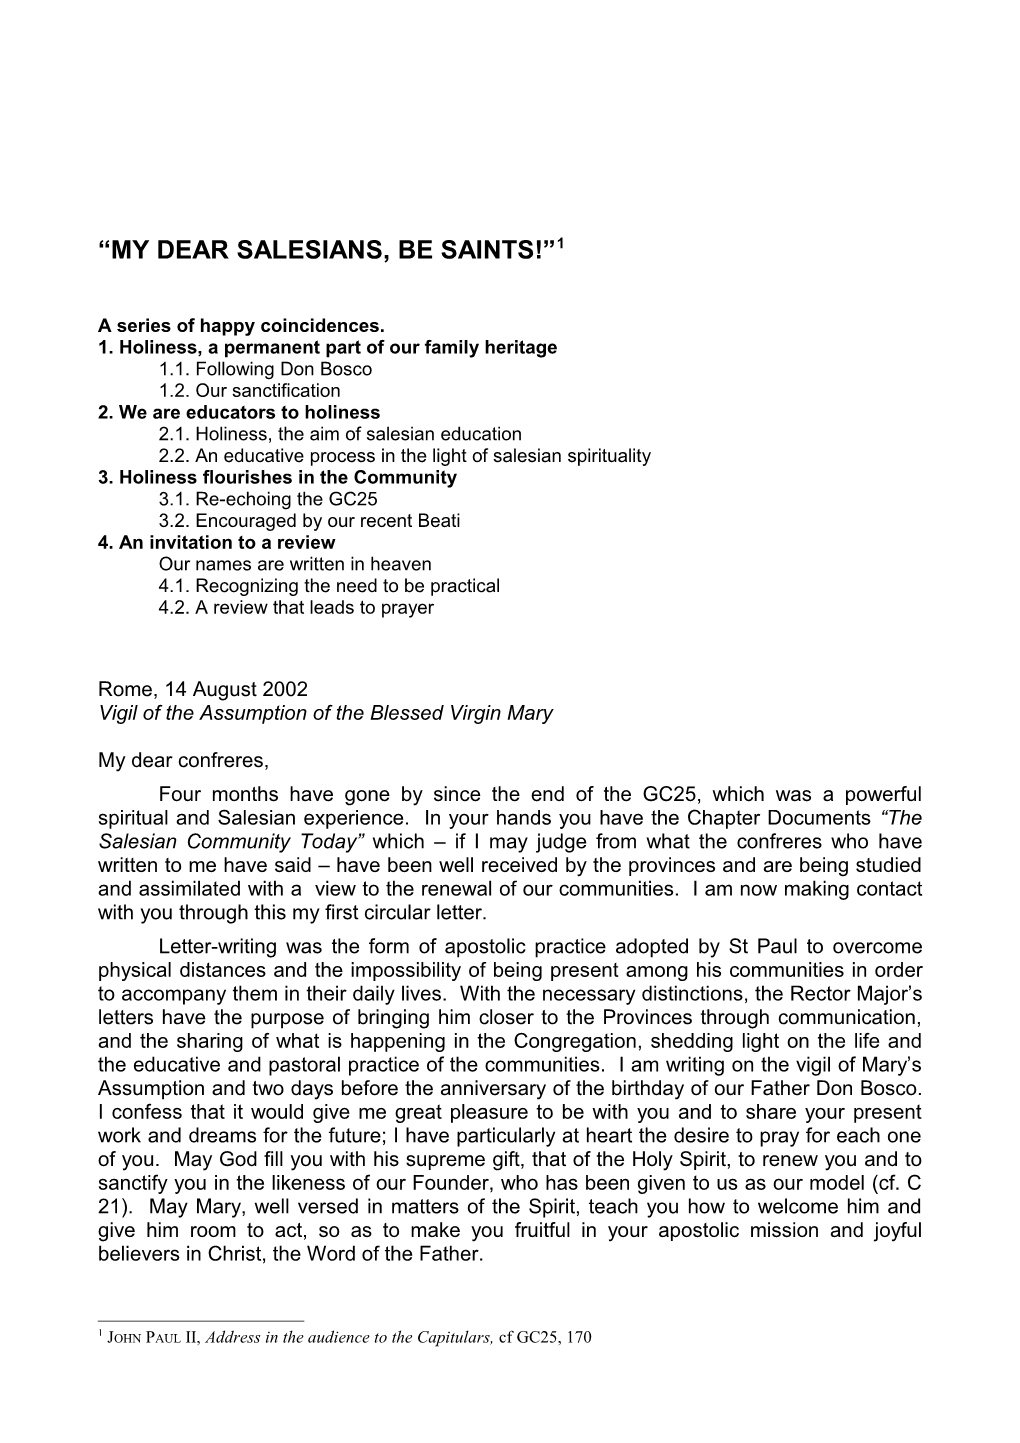 My Dear Salesians, Be Saints